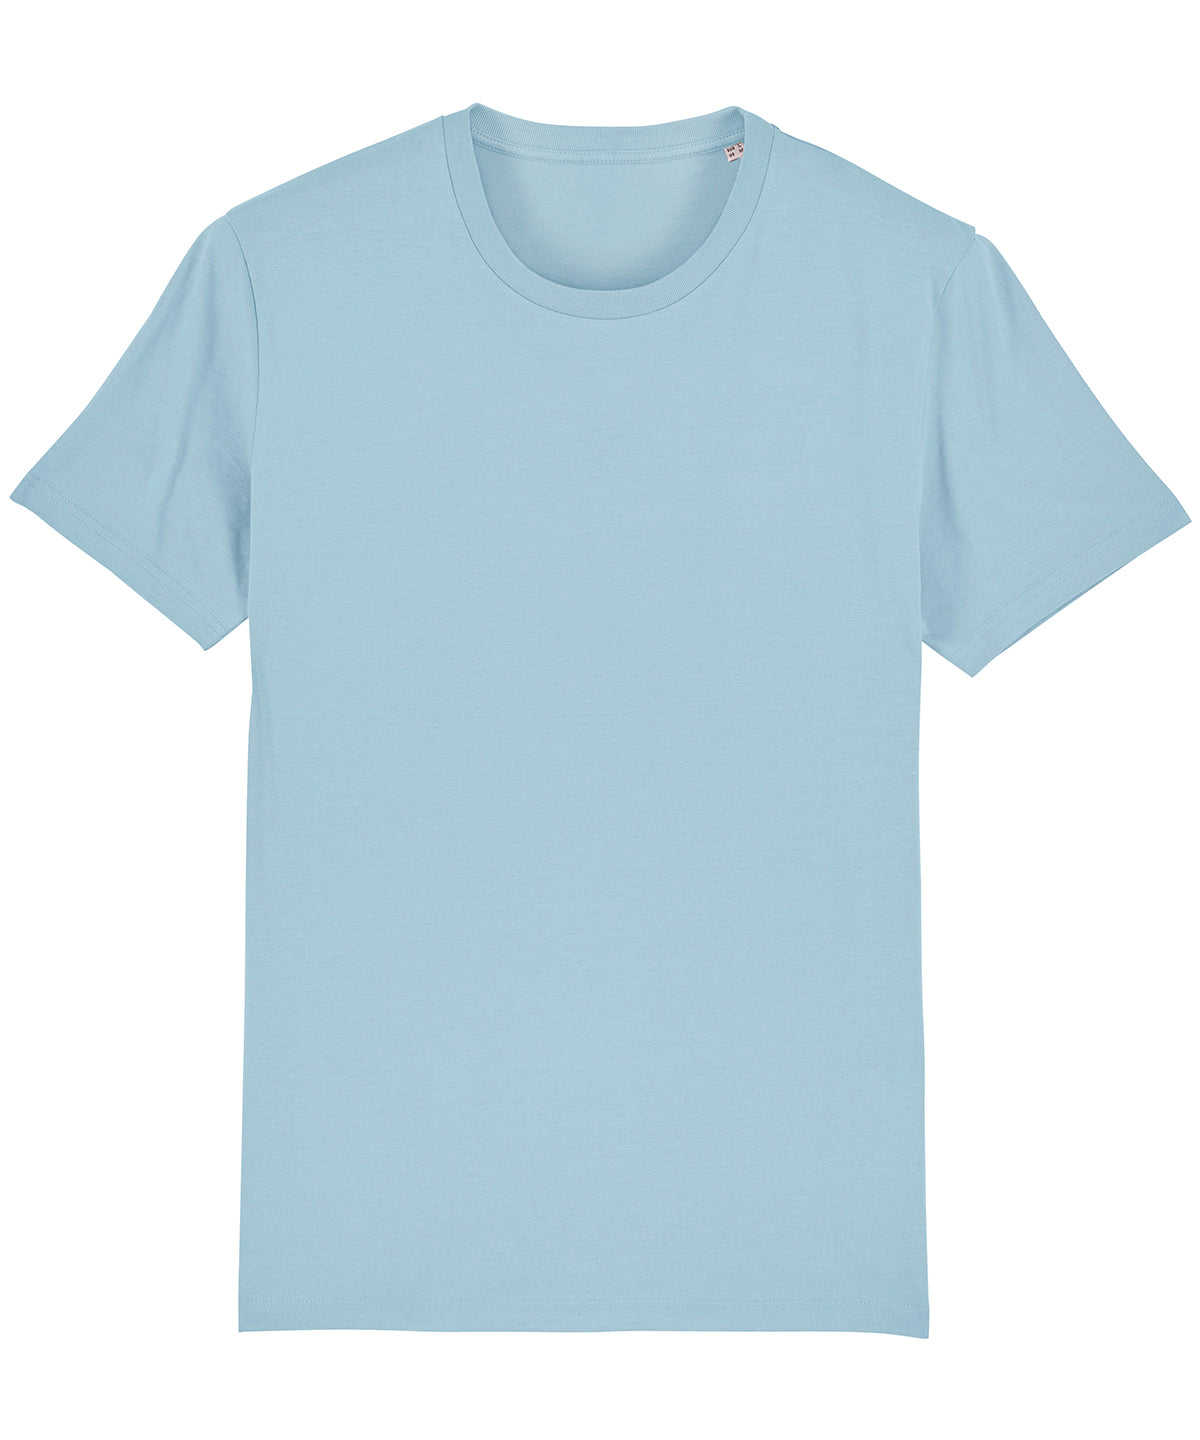 Stanley/Stella Unisex Creator Iconic T-Shirt  Sky Blue